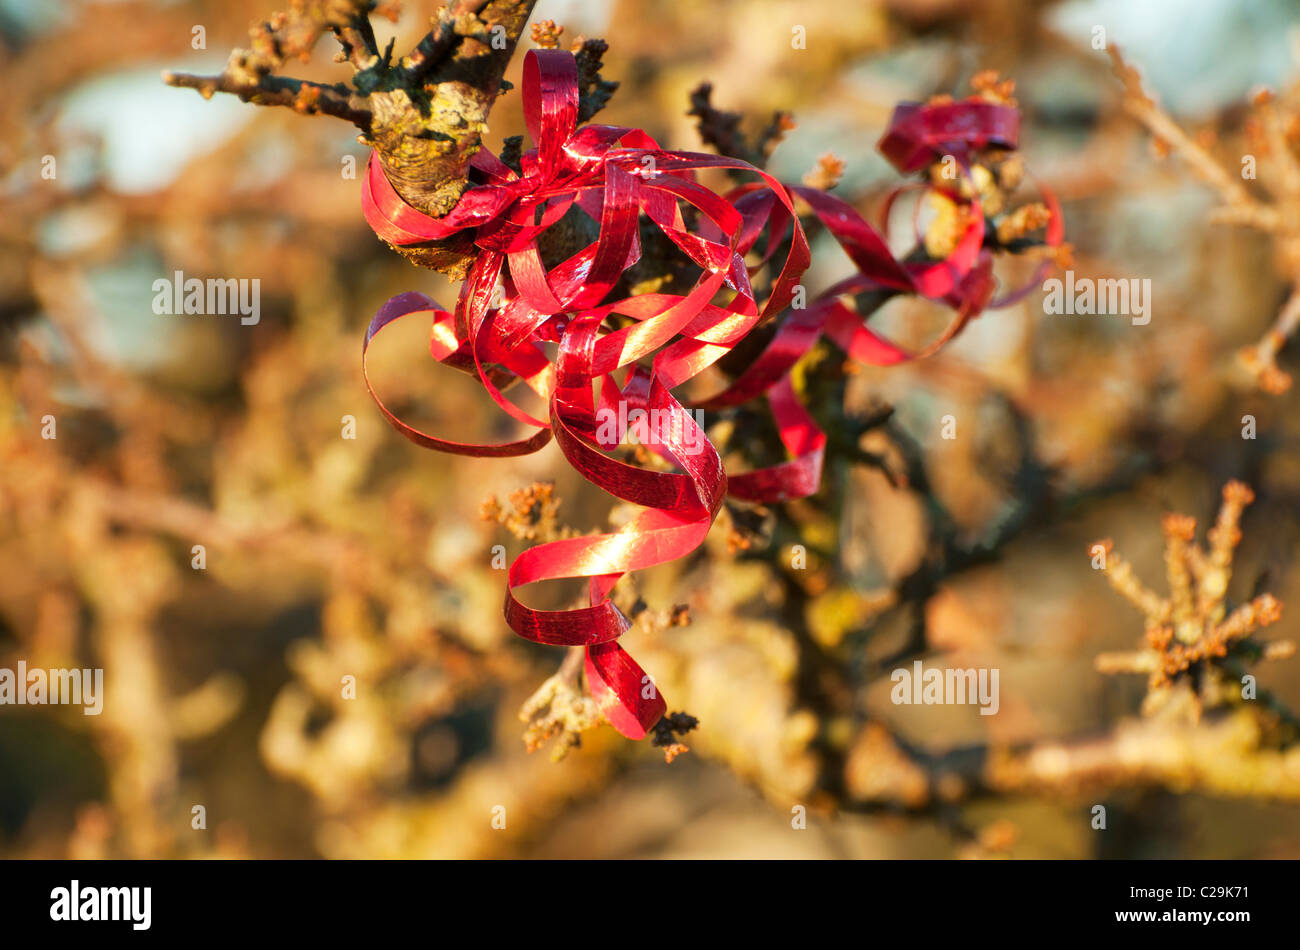 Red gift wrapping ribbon left on gorse bush on Dartmoor, Devon UK Stock Photo